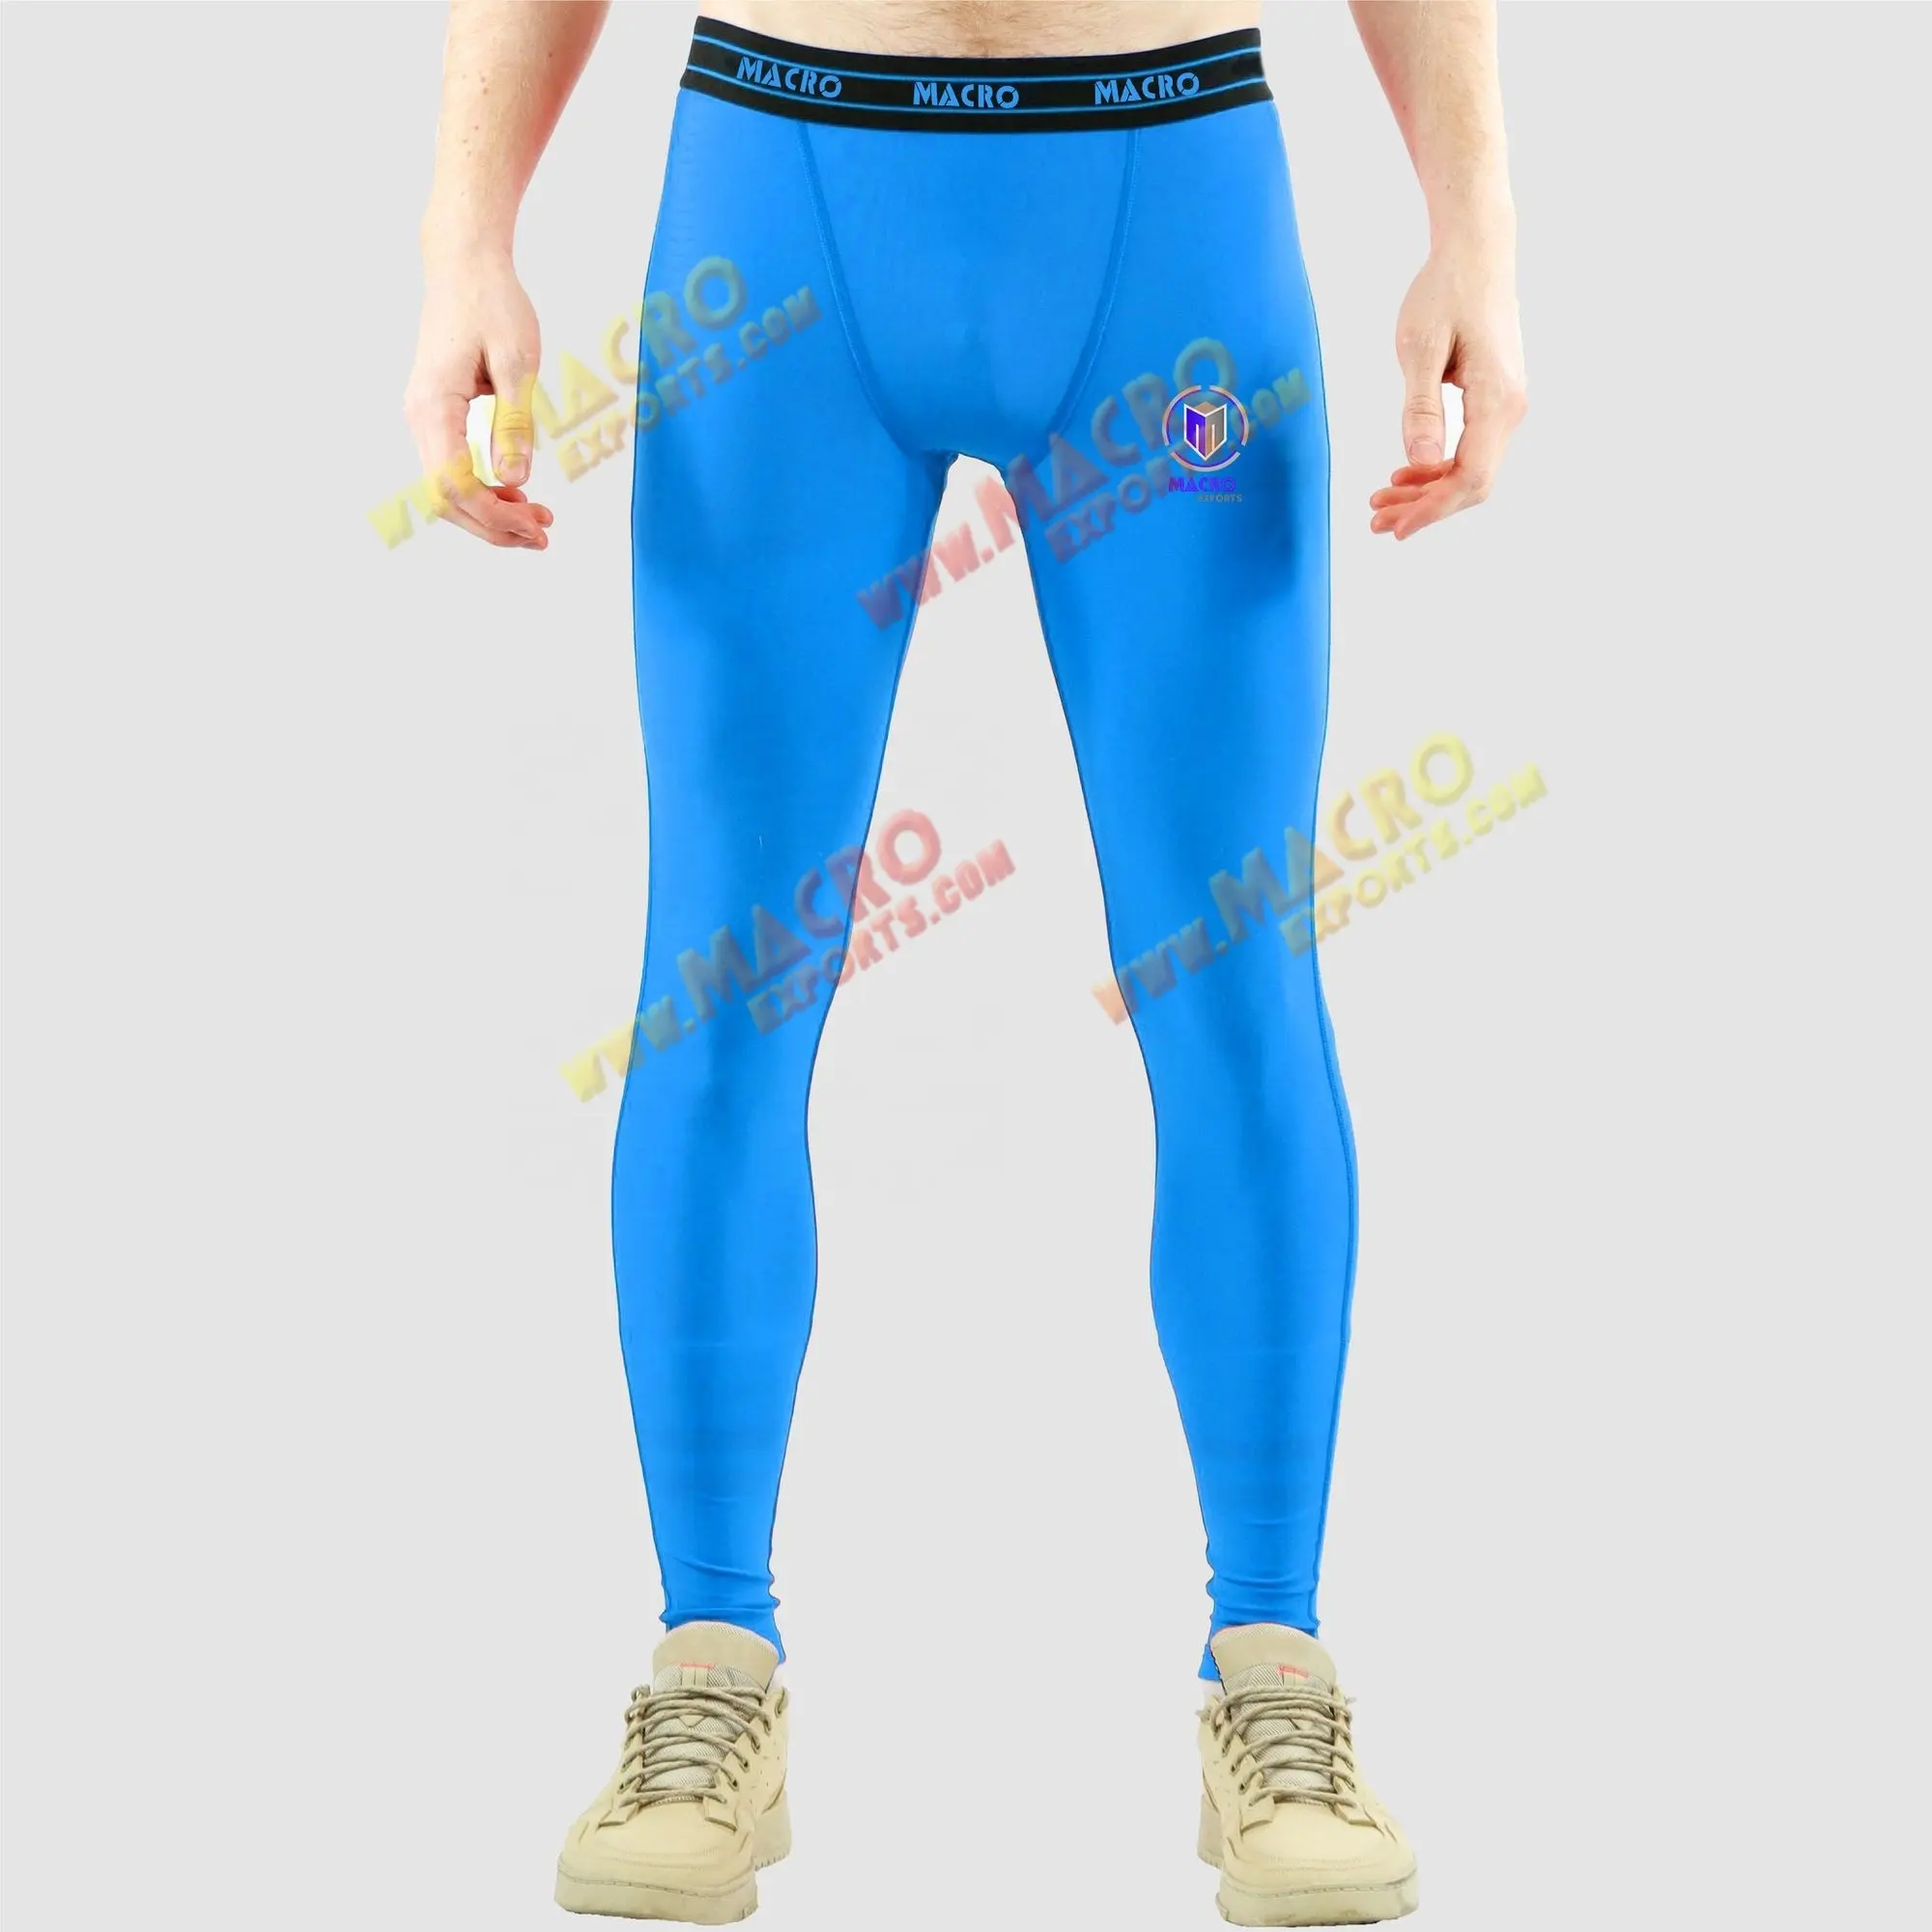 Wholesale Men Fitness leggings elastic waistband leggings sport Running yoga pants for men Plus Size Printed Pant